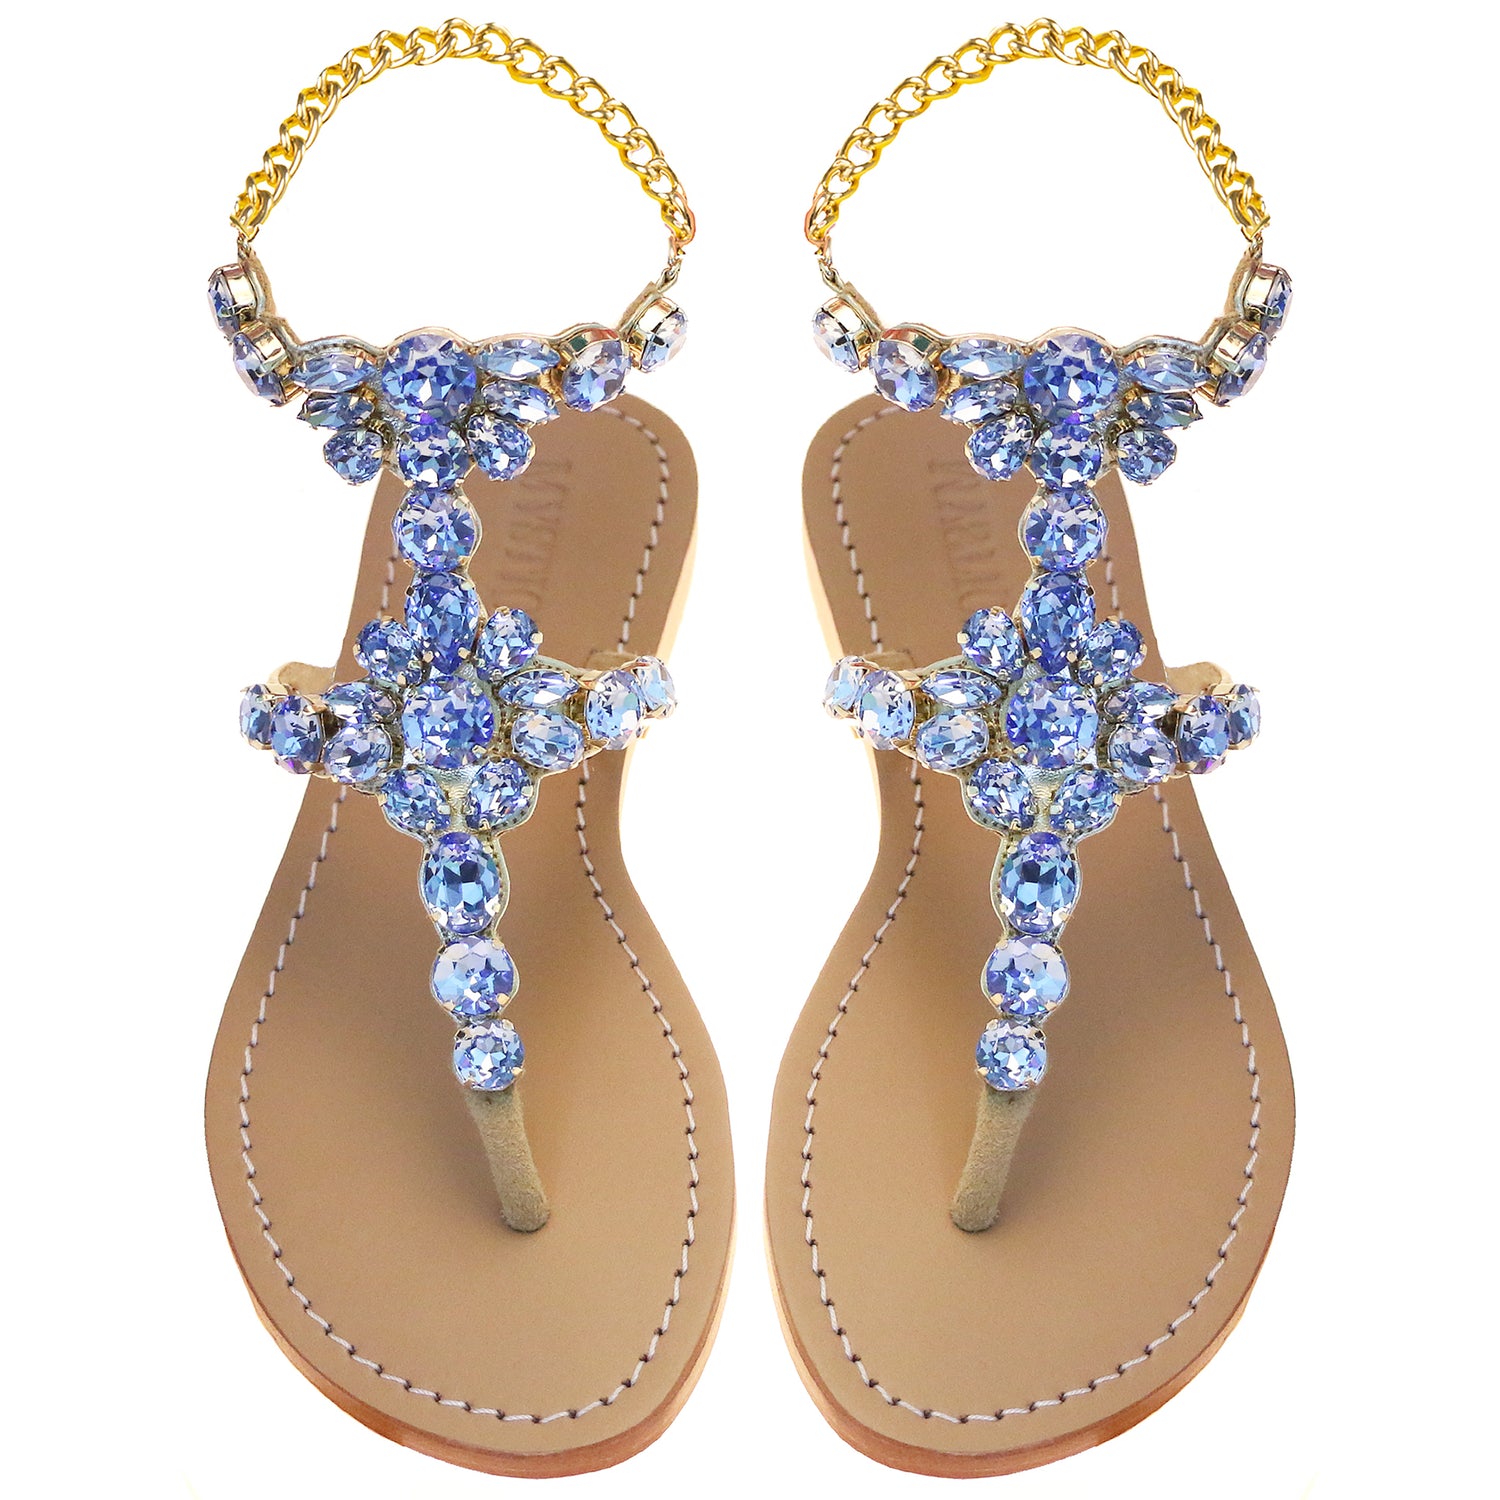 Finland - Women's Blue Jeweled Ankle Strap Sandals | Mystique Sandals